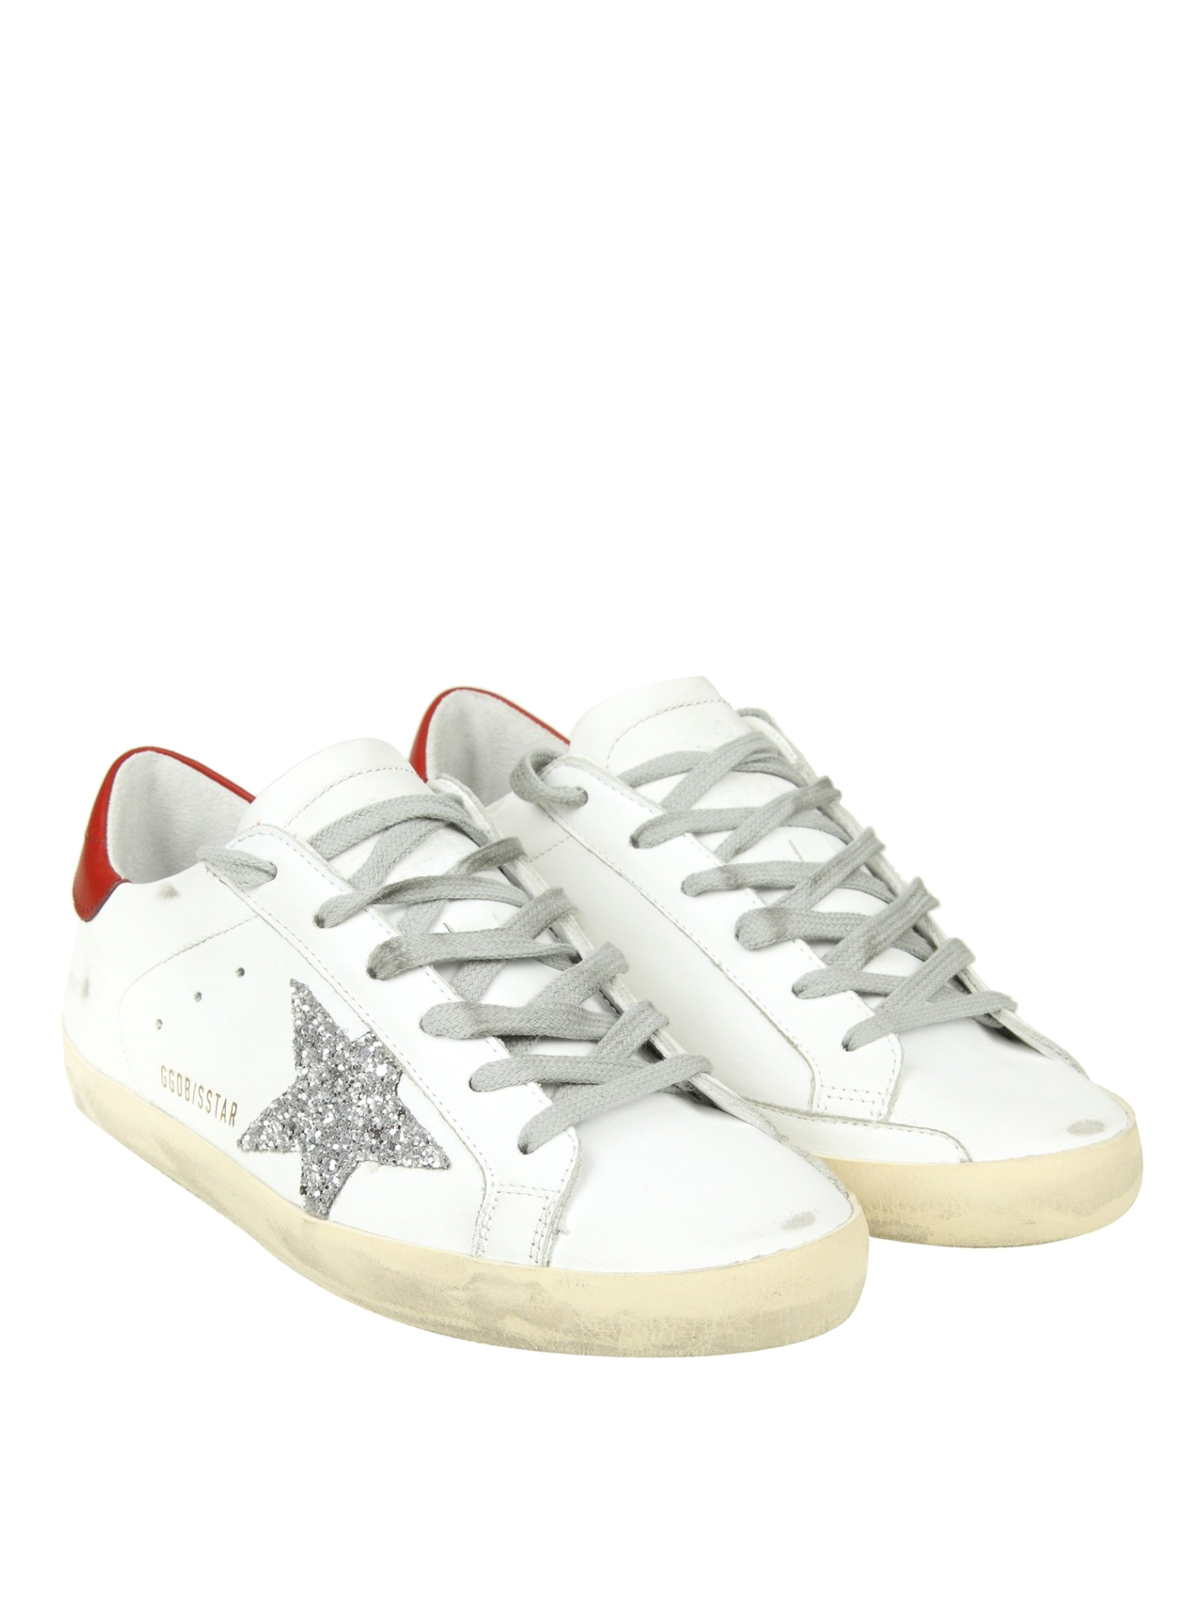 Converse CT All Star High-top shoes Gray Logo Print Boy's Sz 3 - EUC |  eBay